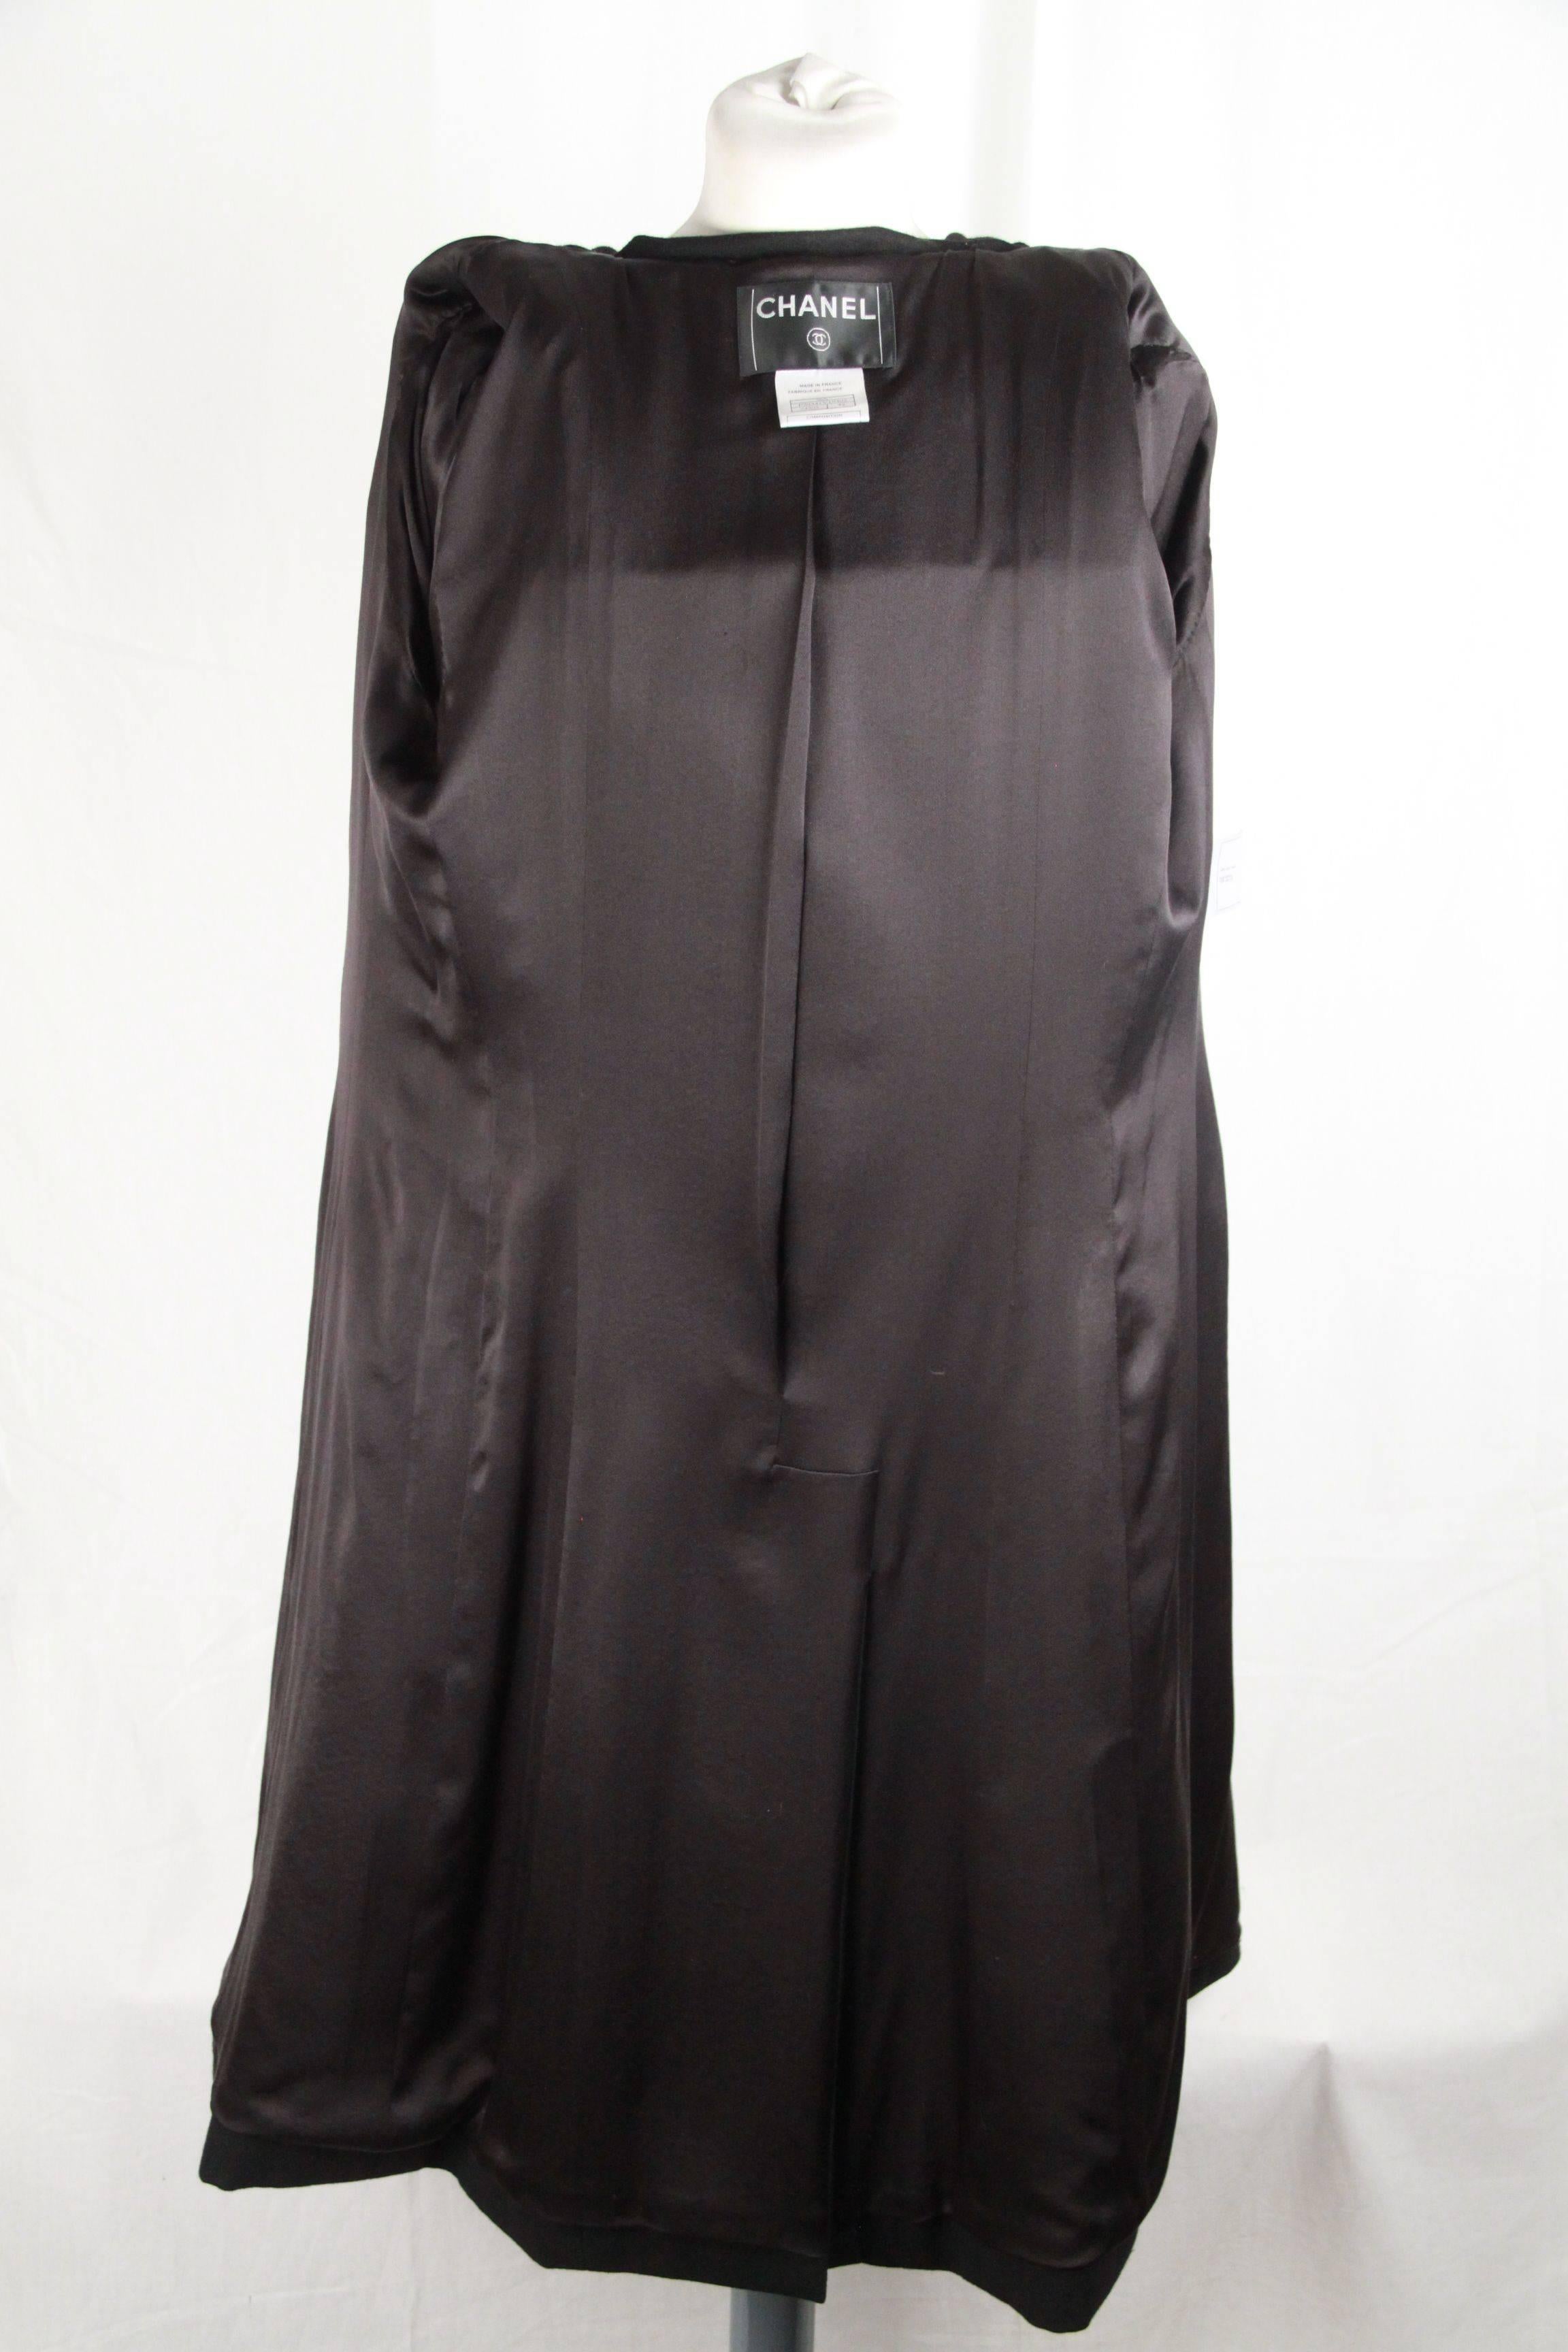 CHANEL Vintage Black Wool HOODED DUFFLE COAT Size 42 1